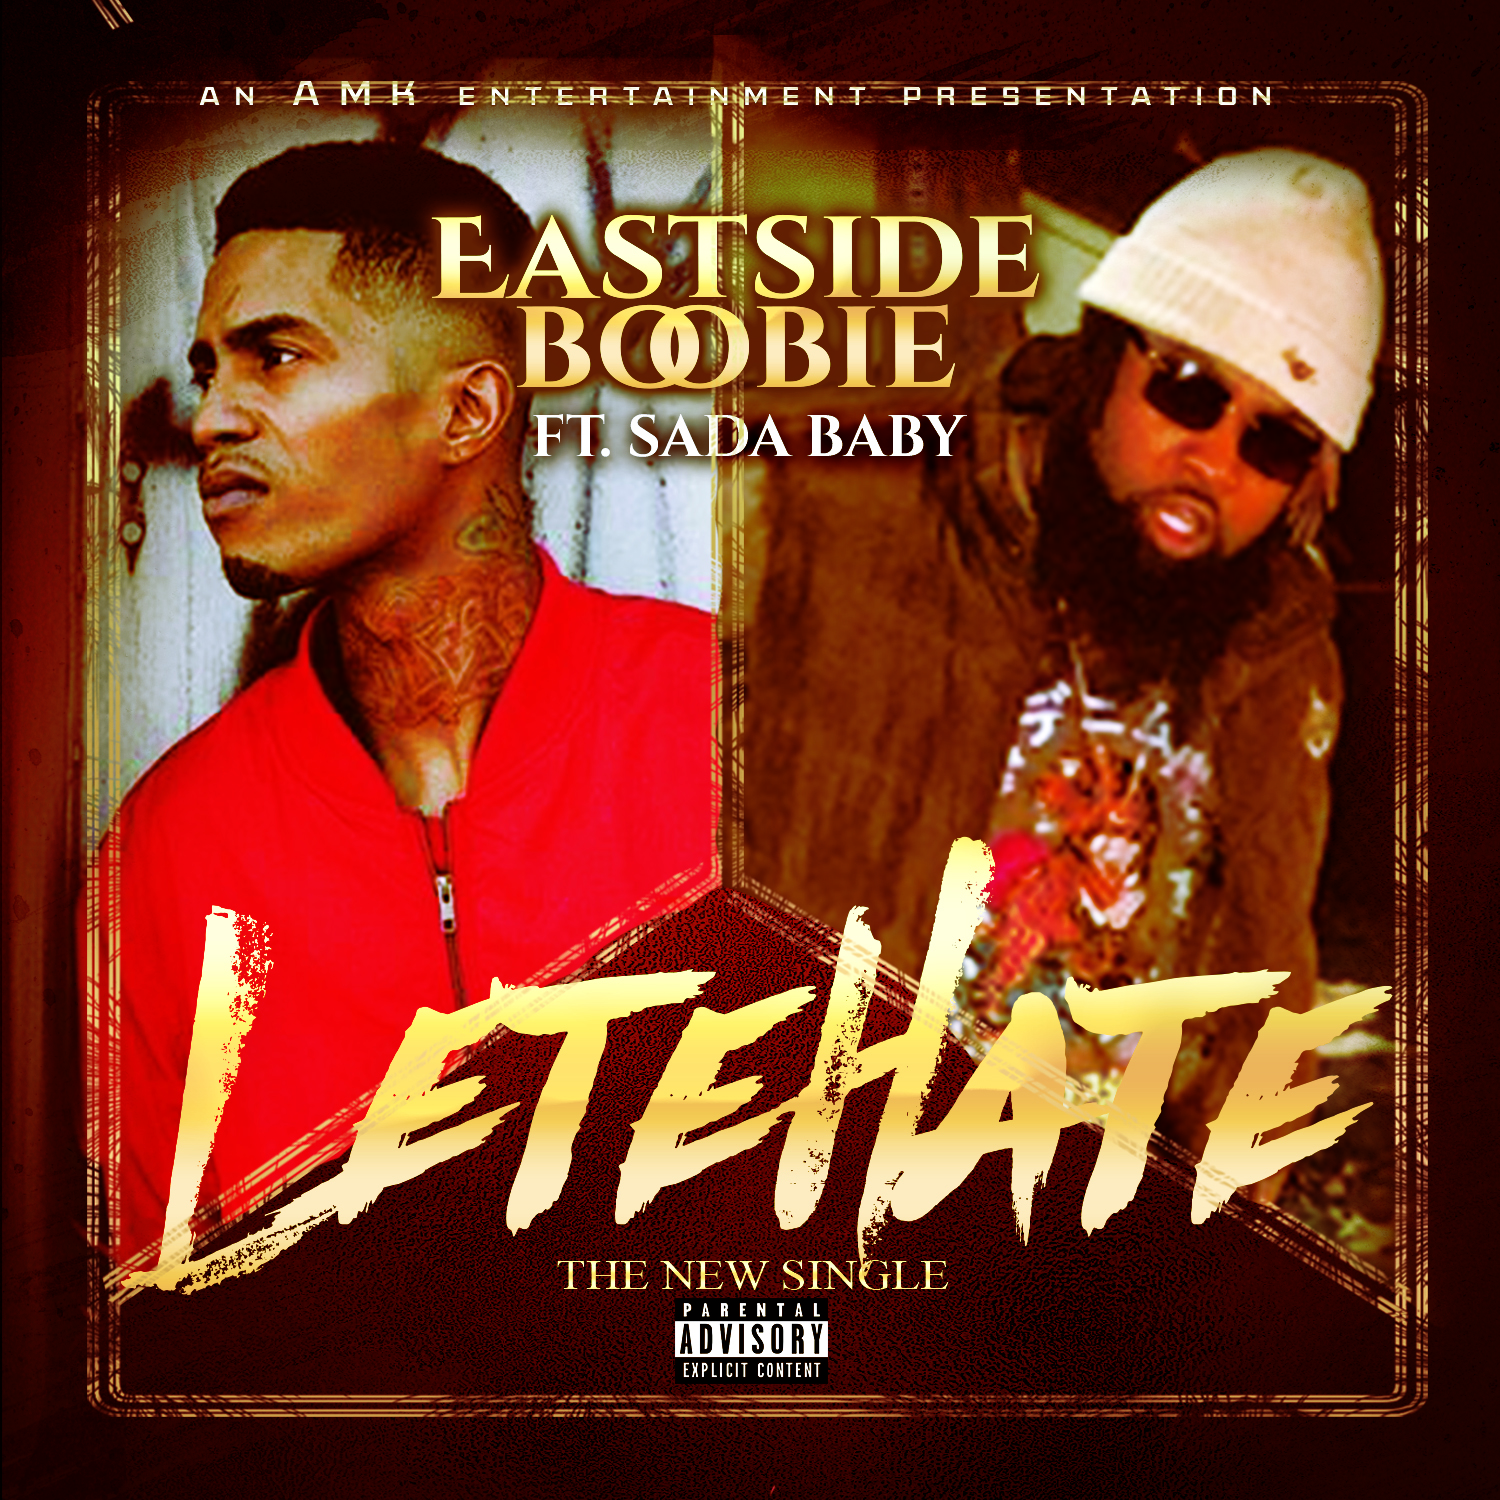 [New Music]- Eastside Boobie – Let’em Hate ft Sada Baby @eastsideboobie1